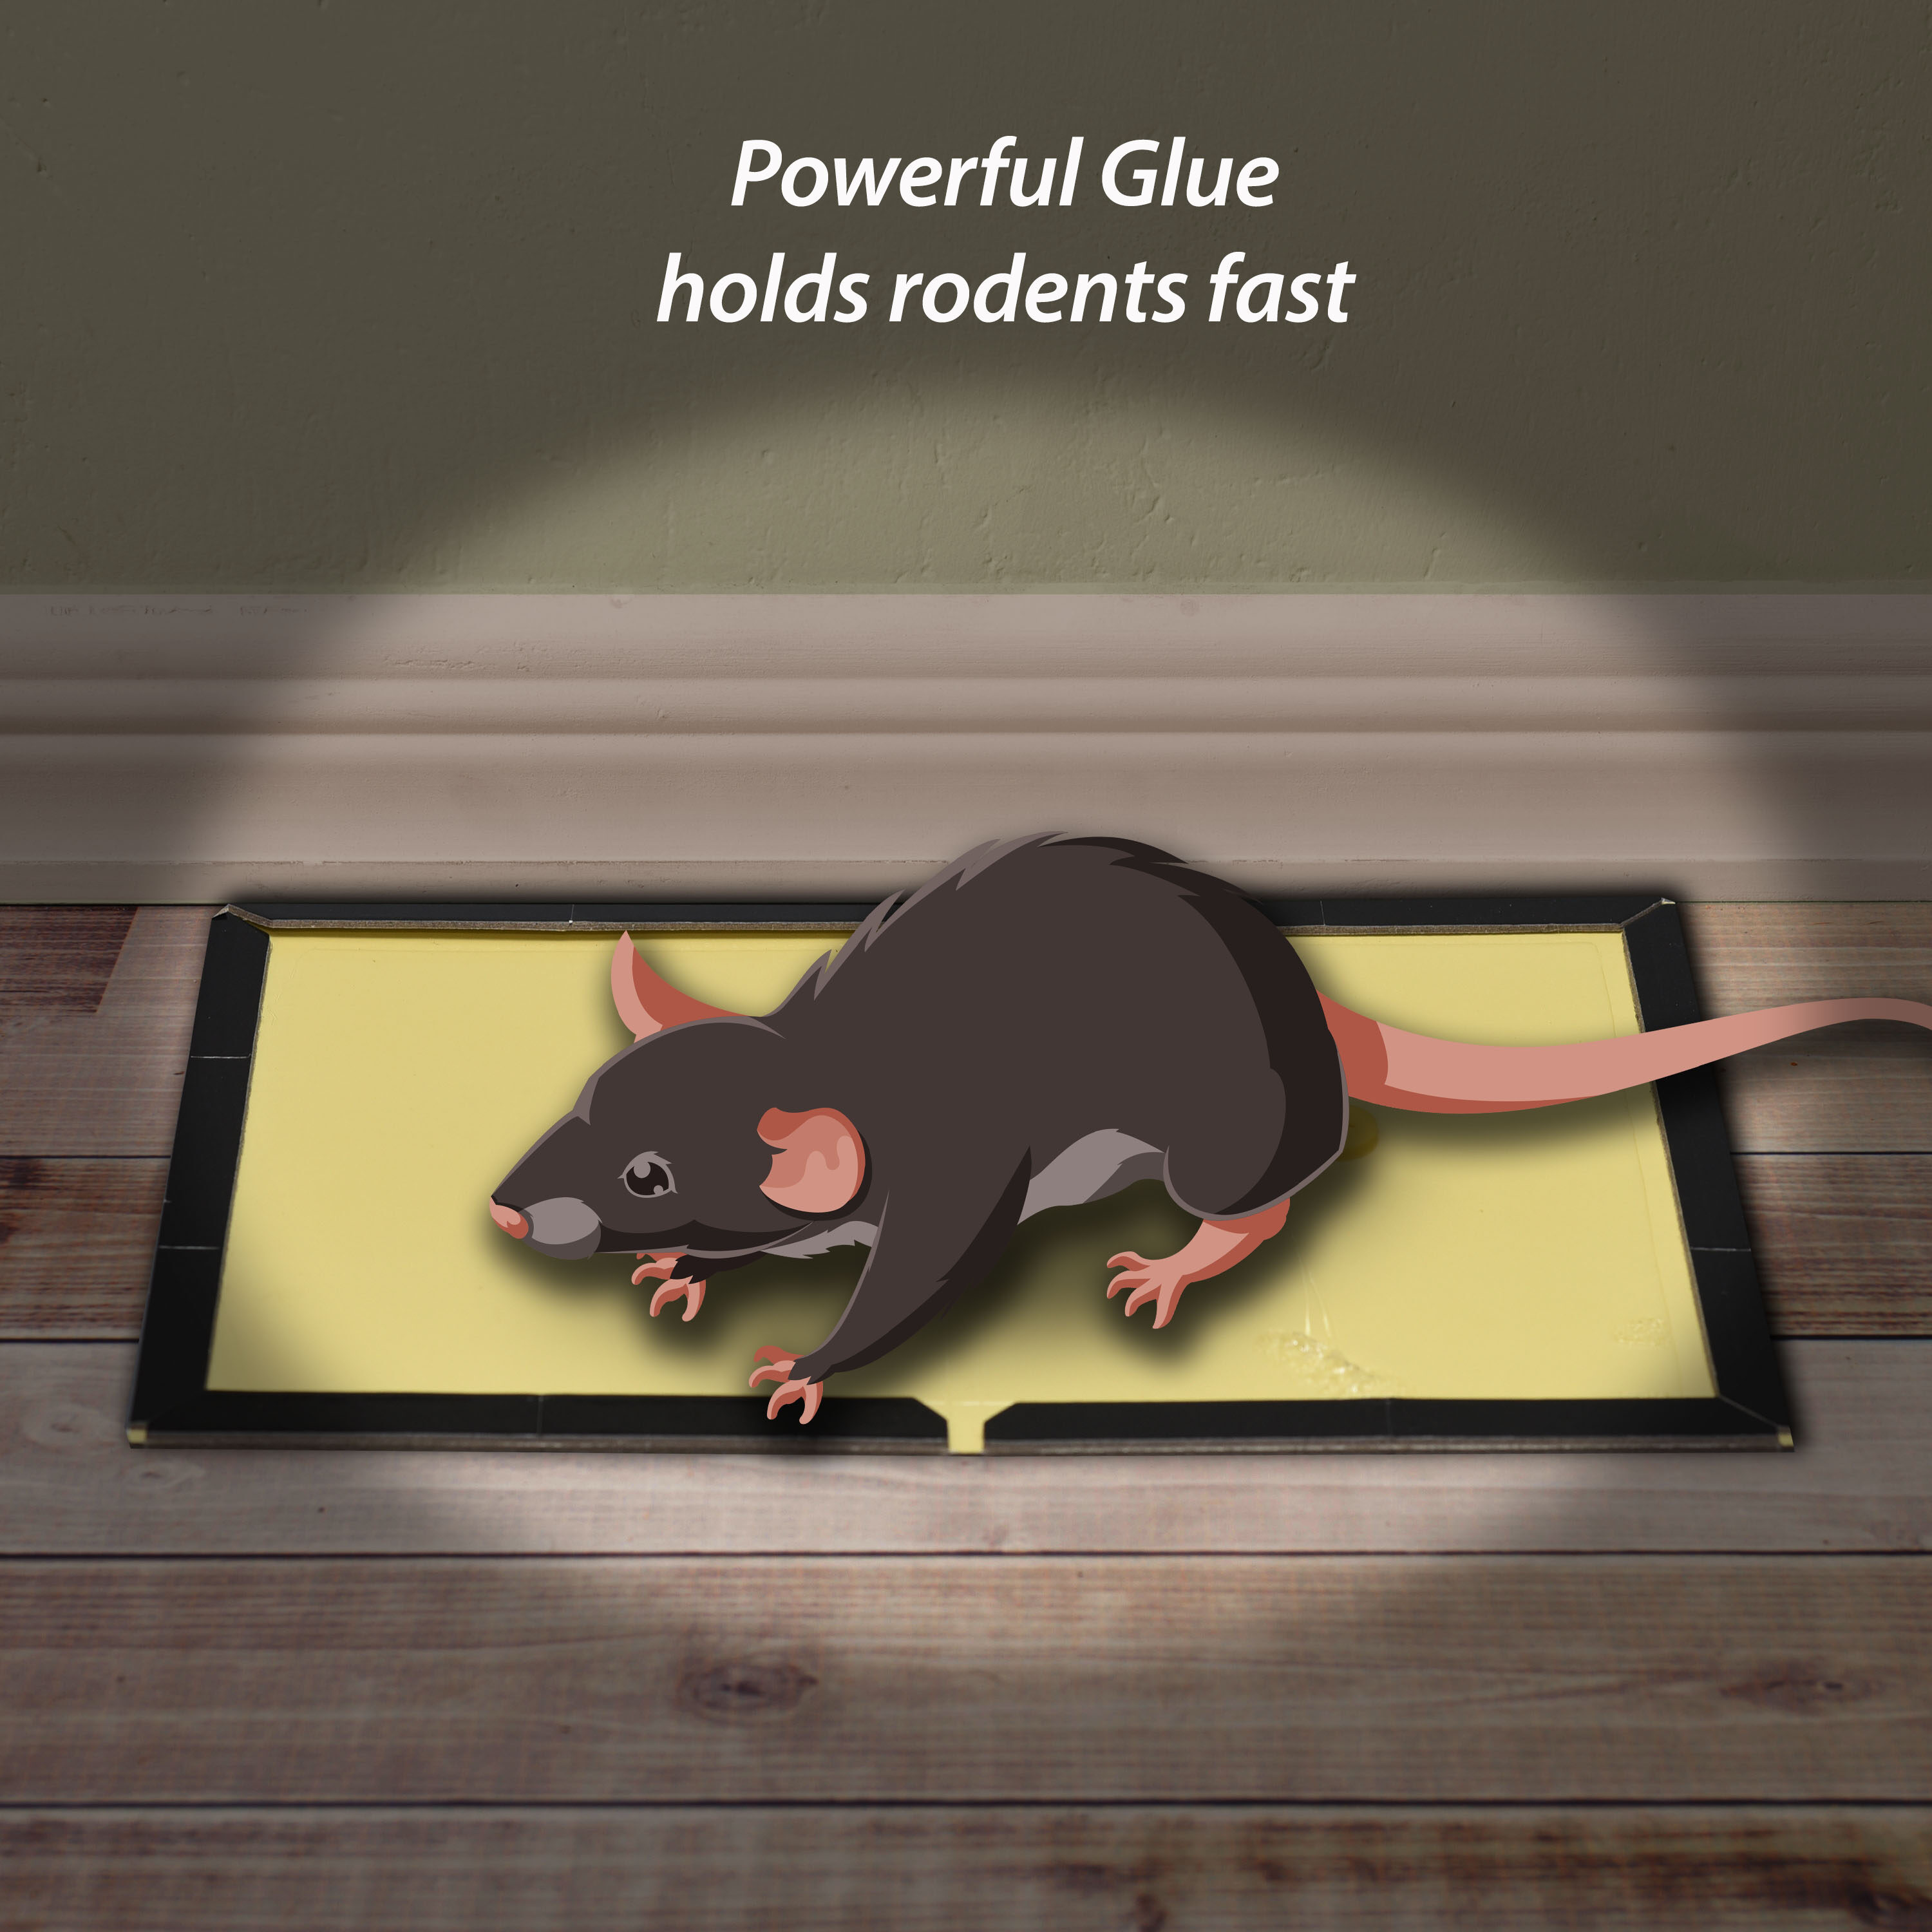 No More Mice: Use Wilson Control Fragranced Glue Traps